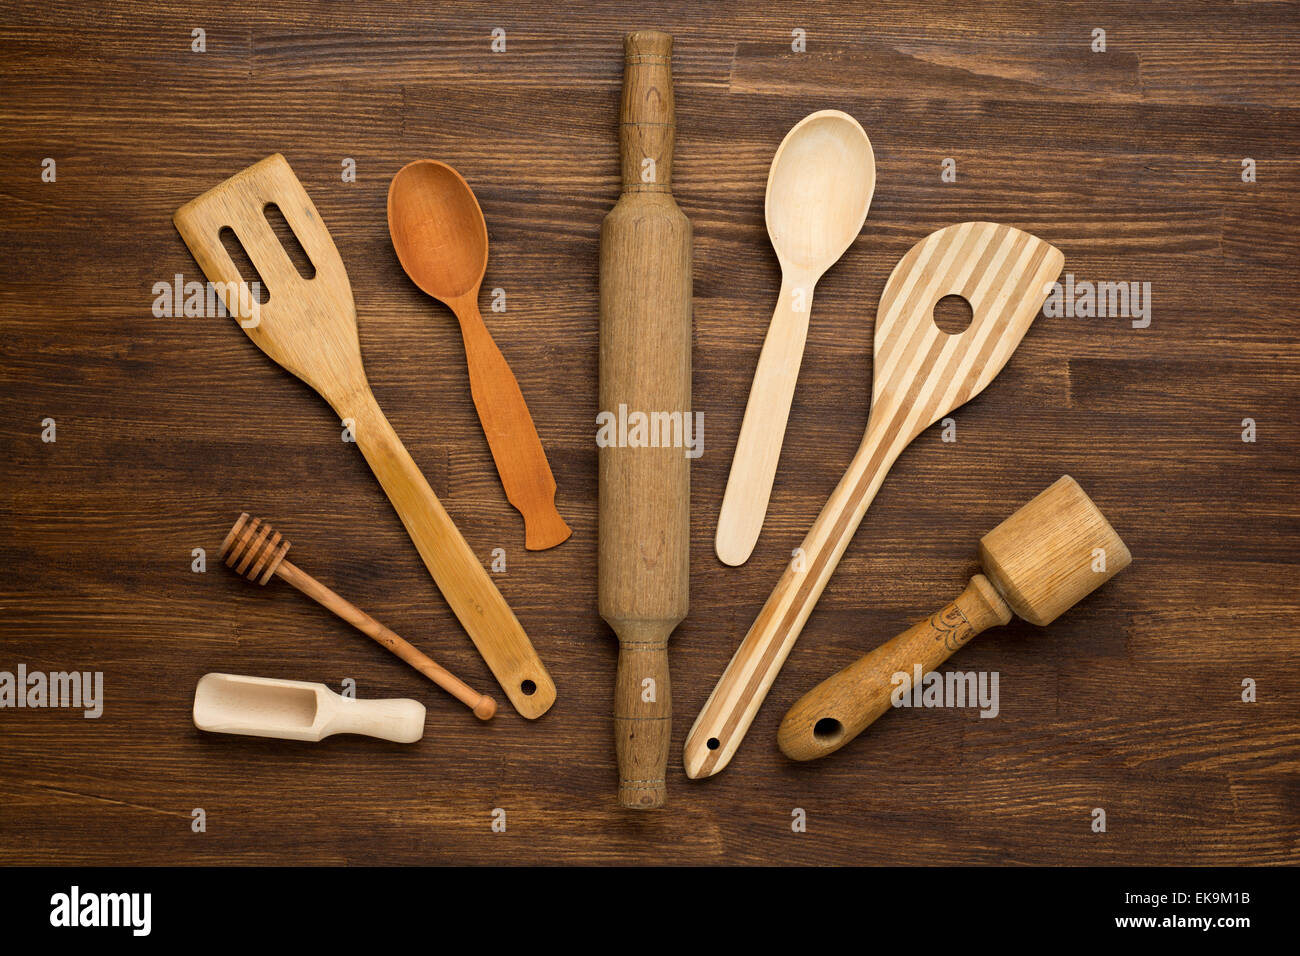 https://c8.alamy.com/comp/EK9M1B/wooden-kitchen-tools-on-vintage-wooden-background-EK9M1B.jpg